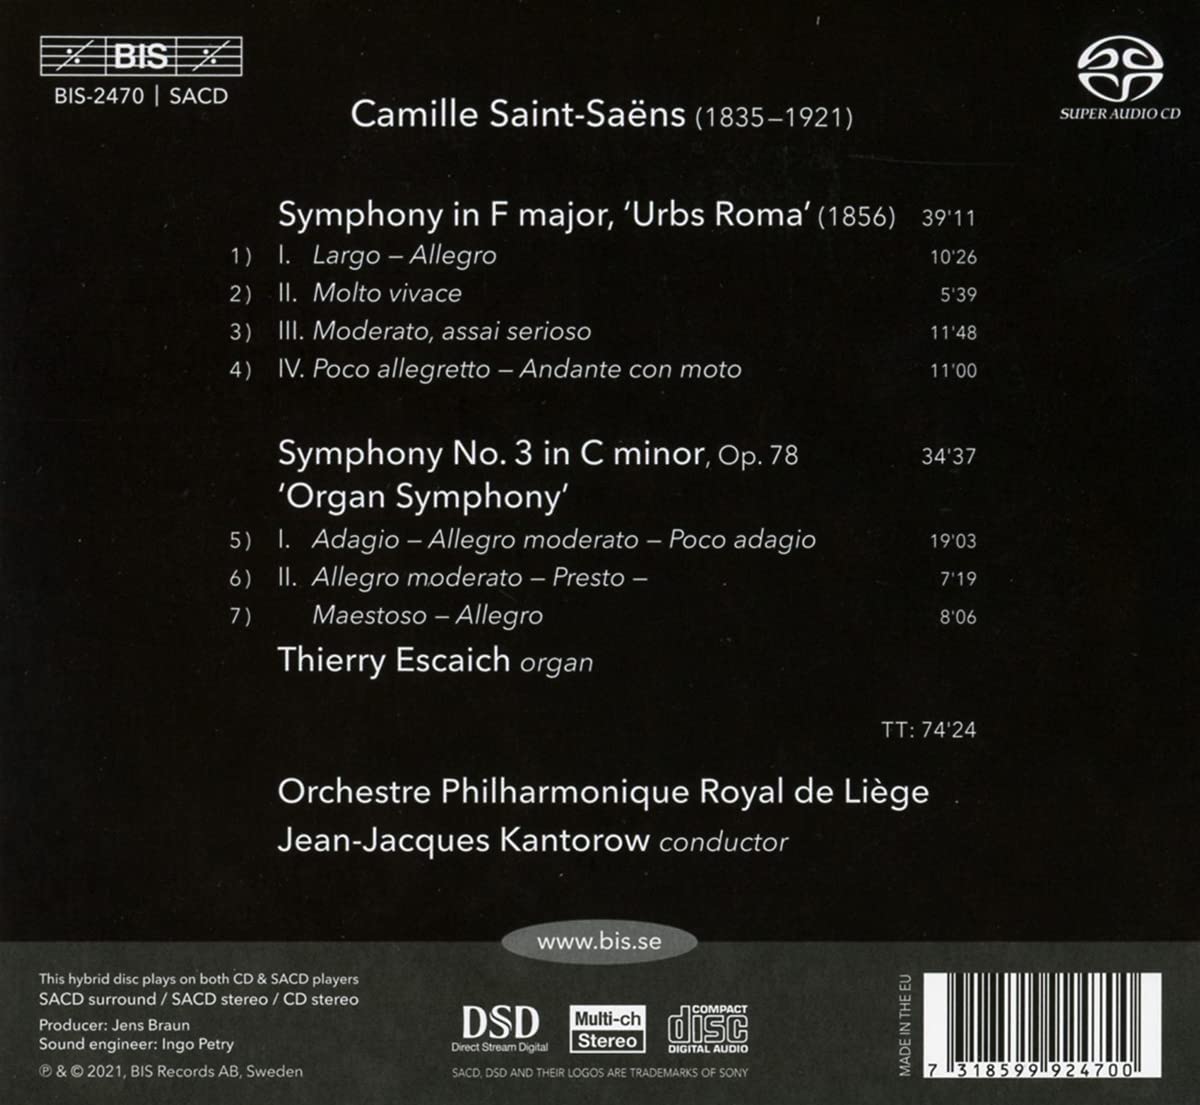 Jean-Jacques Kantorow 생상스: 교향곡 3번 '오르간', '로마 교향곡' (Saint-Saens: Symphony Op.78 'Organ', 'Urbs Roma') 